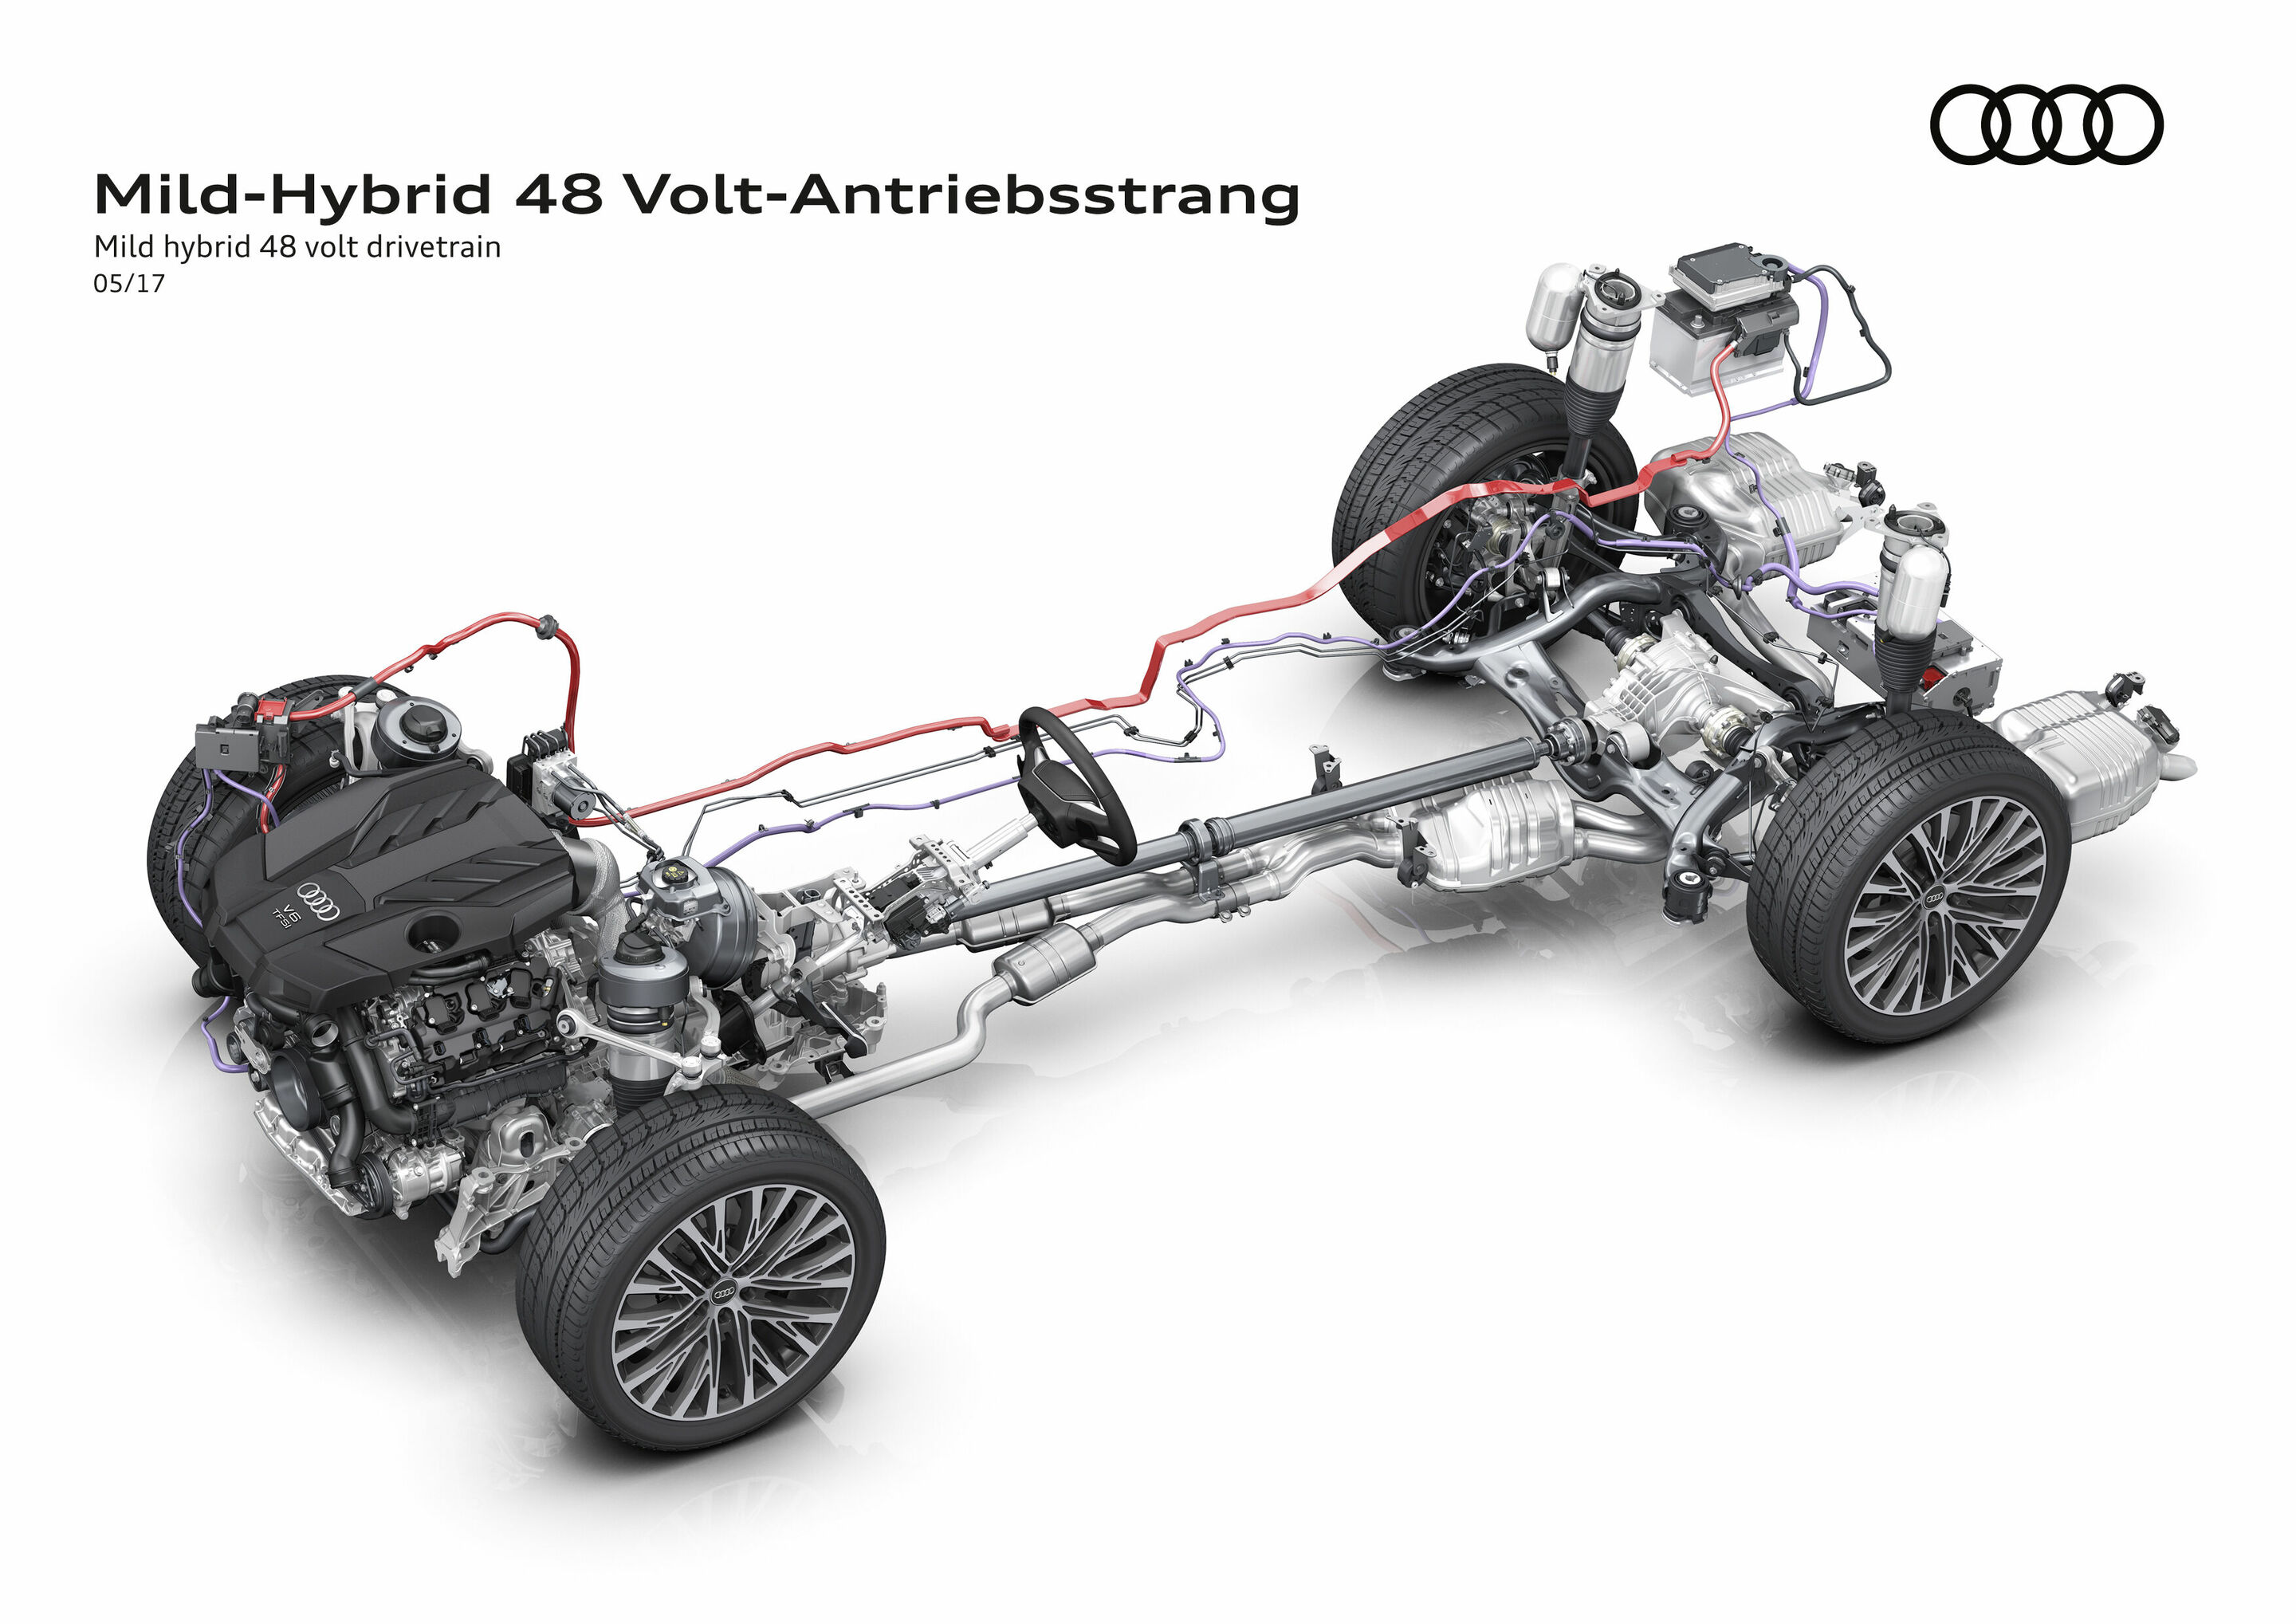 Mild-Hybrid 48 Volt-Antriebsstrang